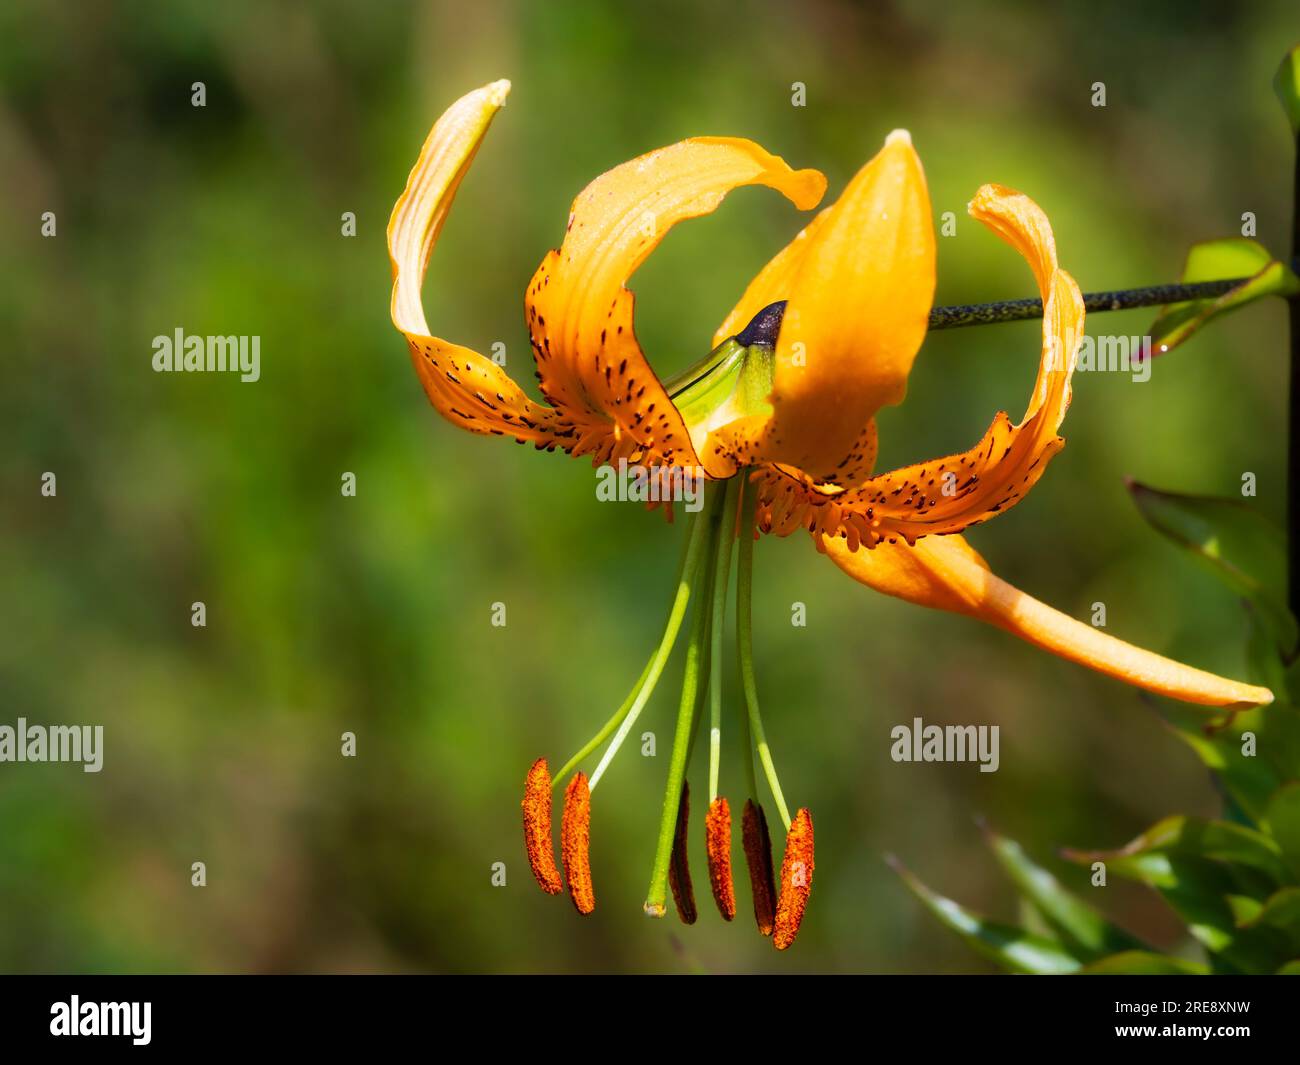 Orange turkscap flower of the hardy, summer flowering lily, Lilium henryi Stock Photo